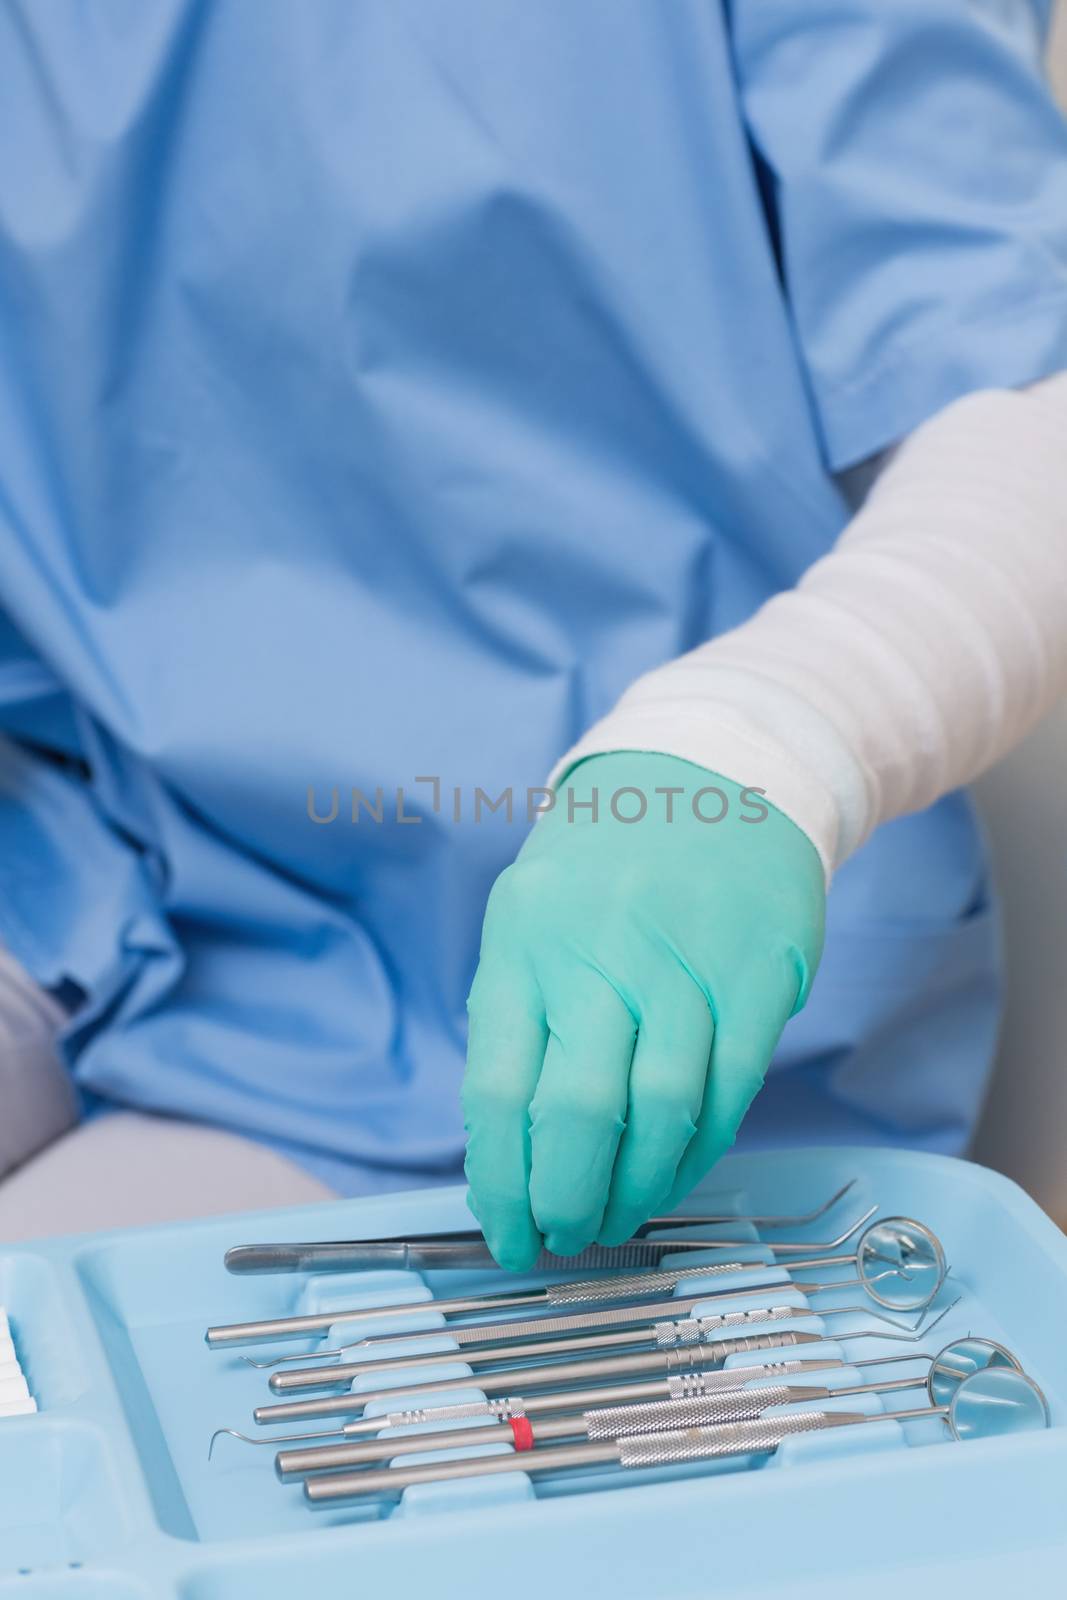 Dentist in blue scrubs picking up tools by Wavebreakmedia